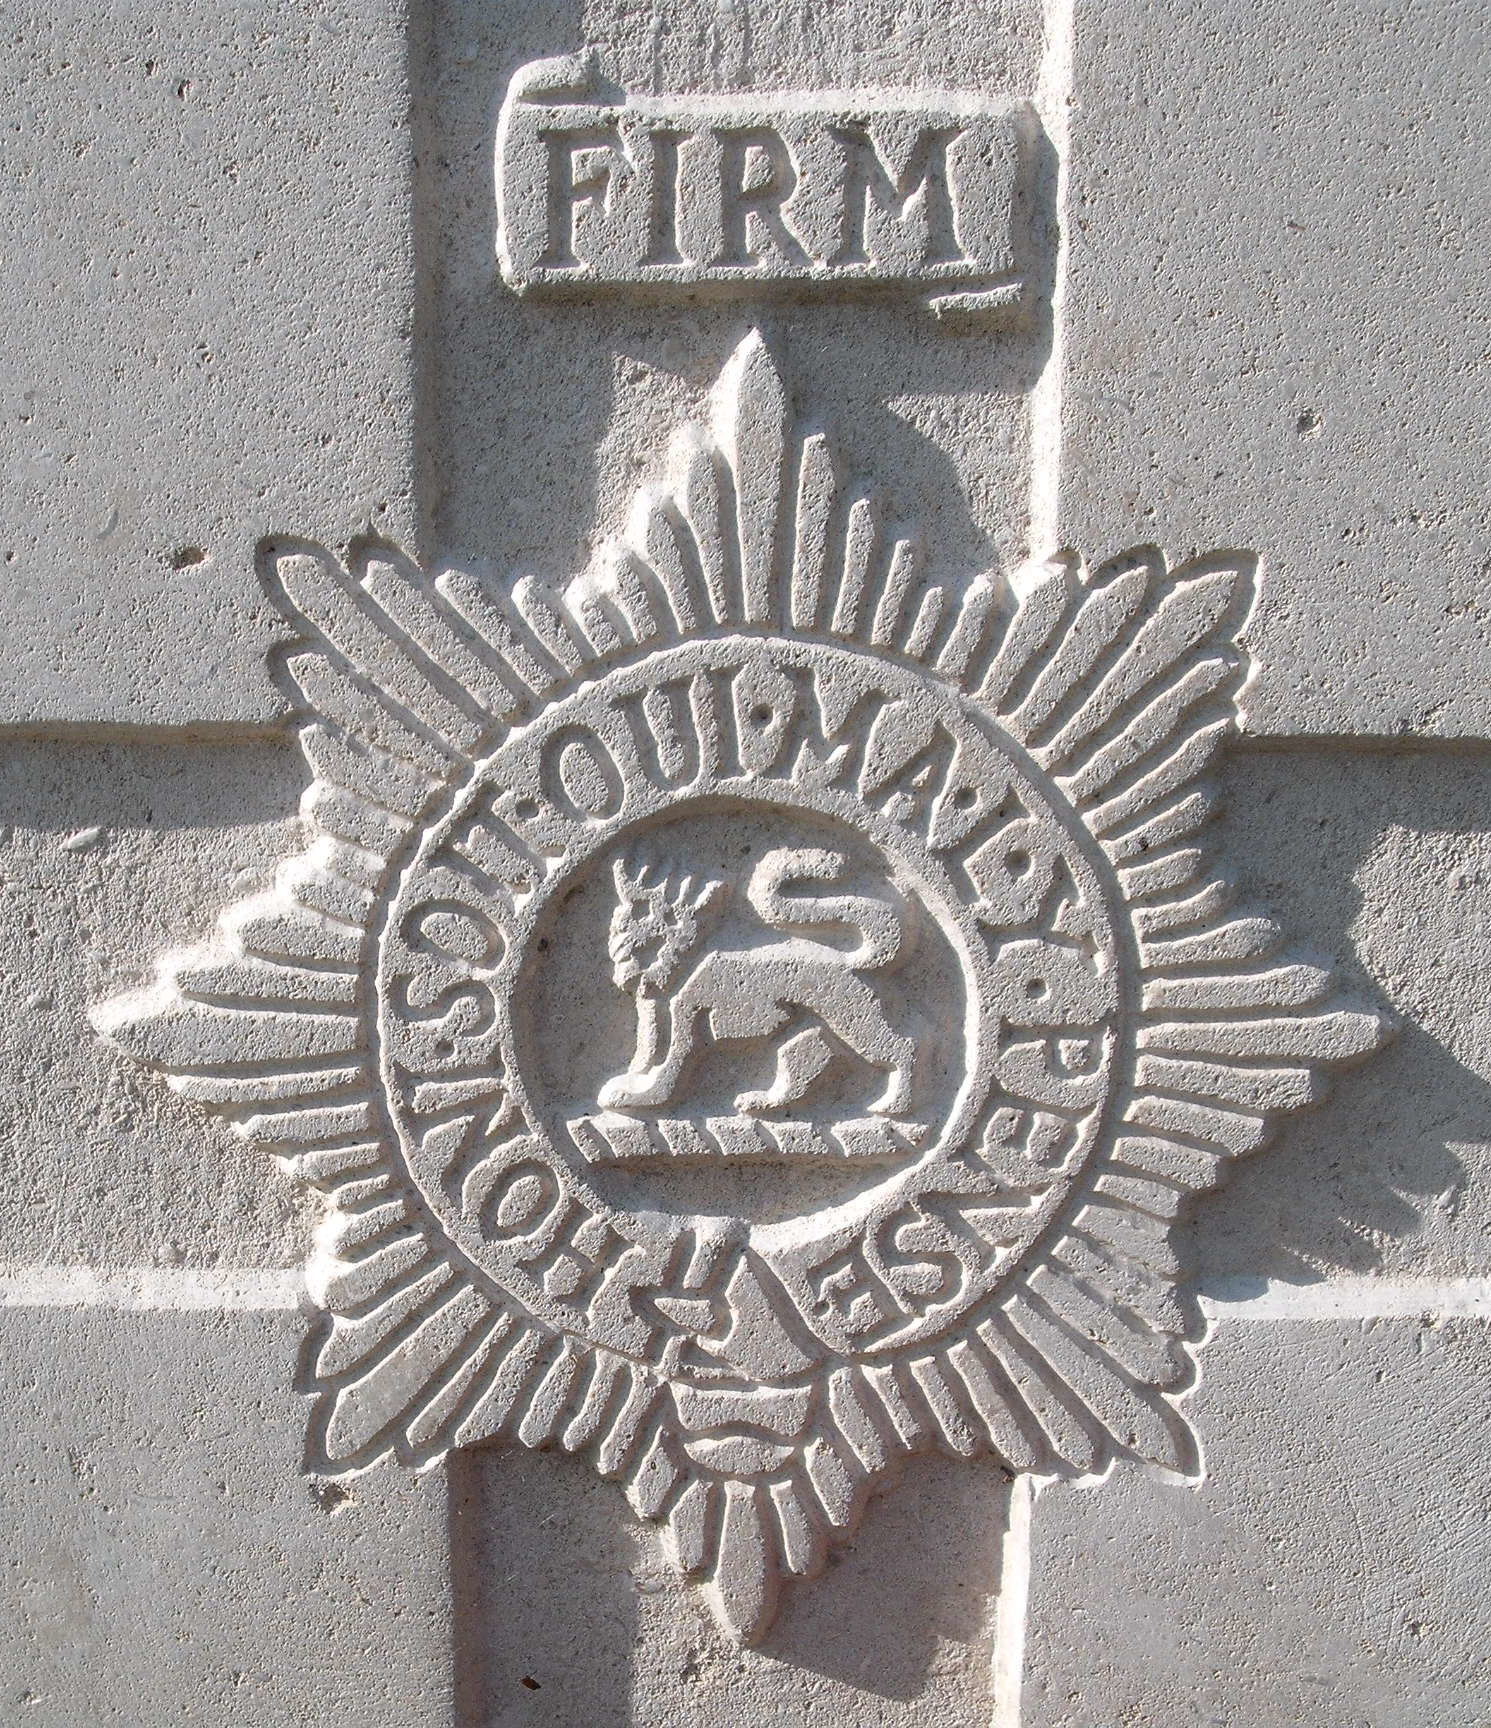 Capbadge of the Worcestershire Regiment